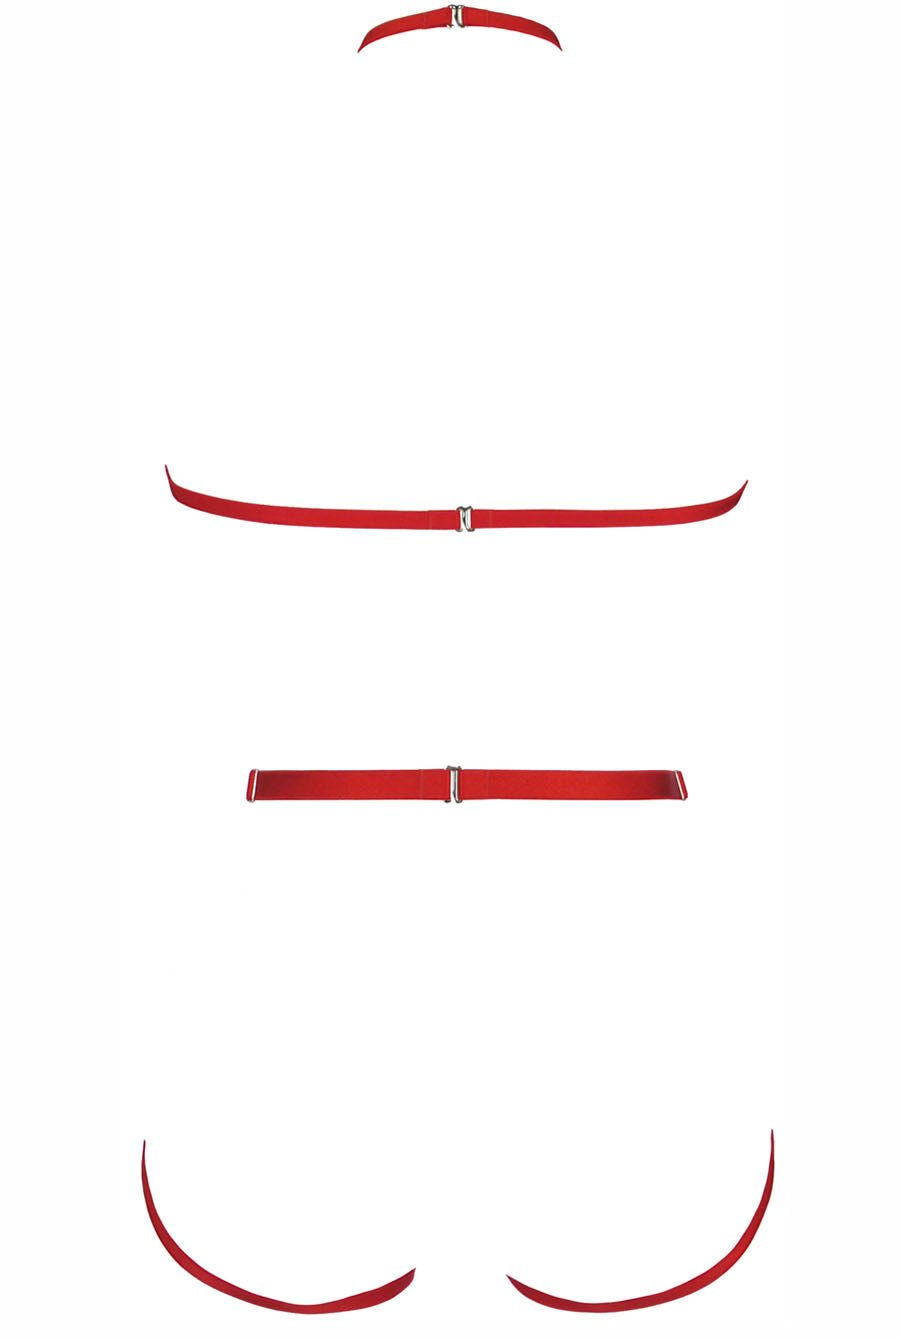 Erotic European Red Adjustable Harness - Lingerie SeductionErotic European Red Adjustable Harness